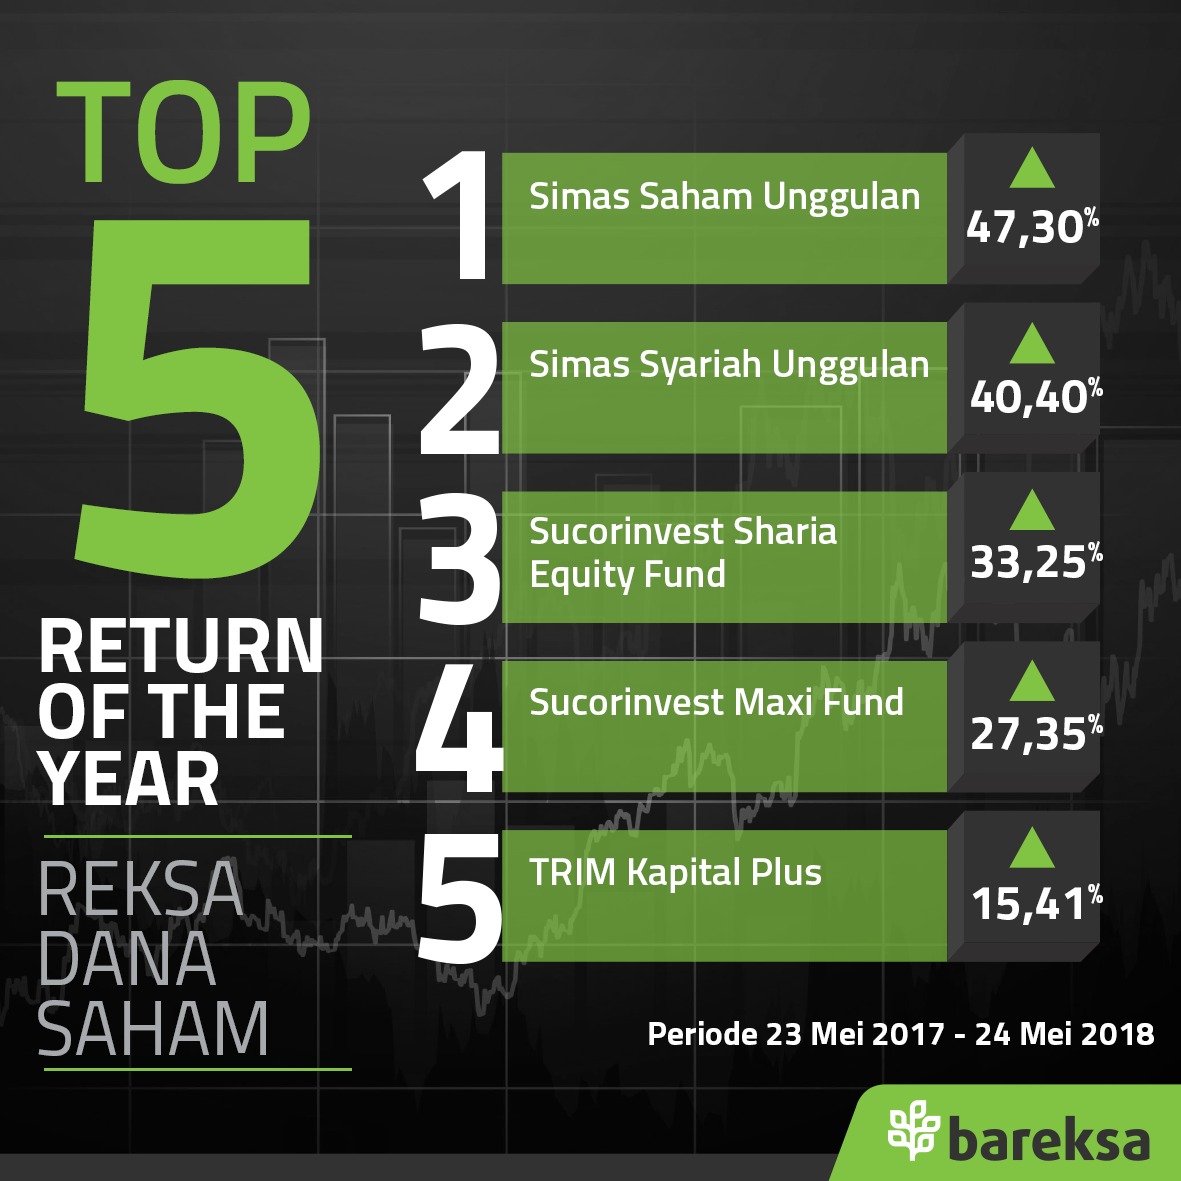 Top 5 Reksadana Saham Return Tertinggi Setahun, Untung 15 - 47 Persen